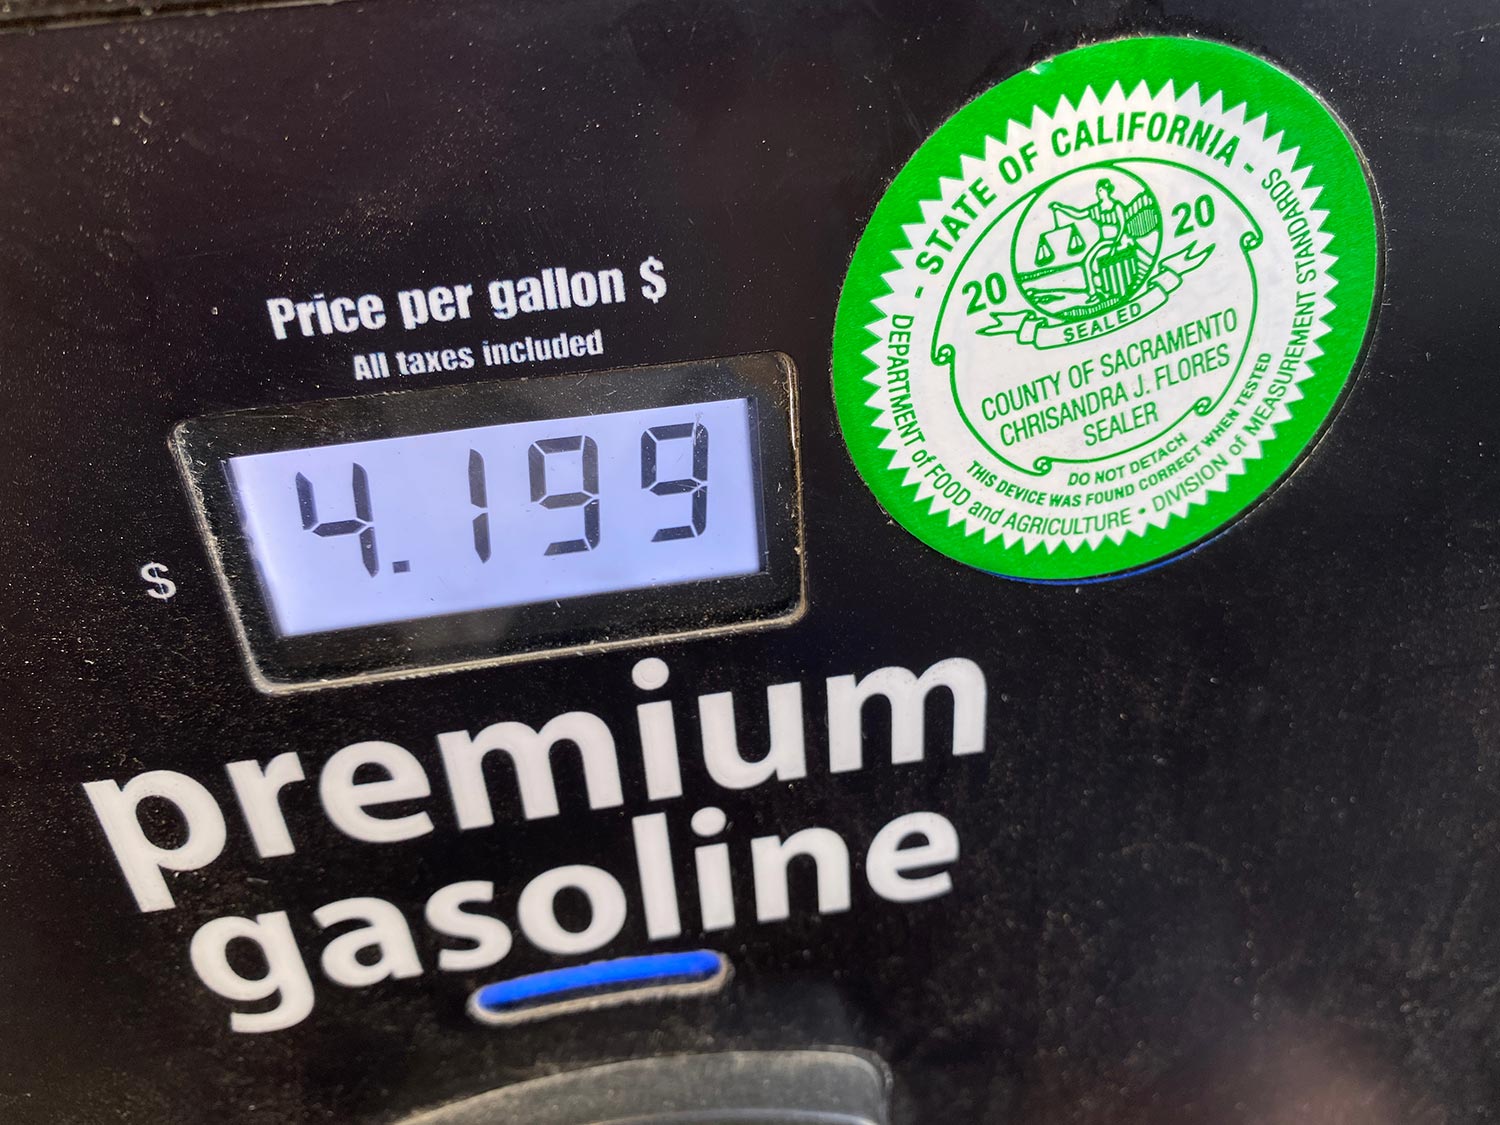 Premium gasoline digital price display on black background of a pump